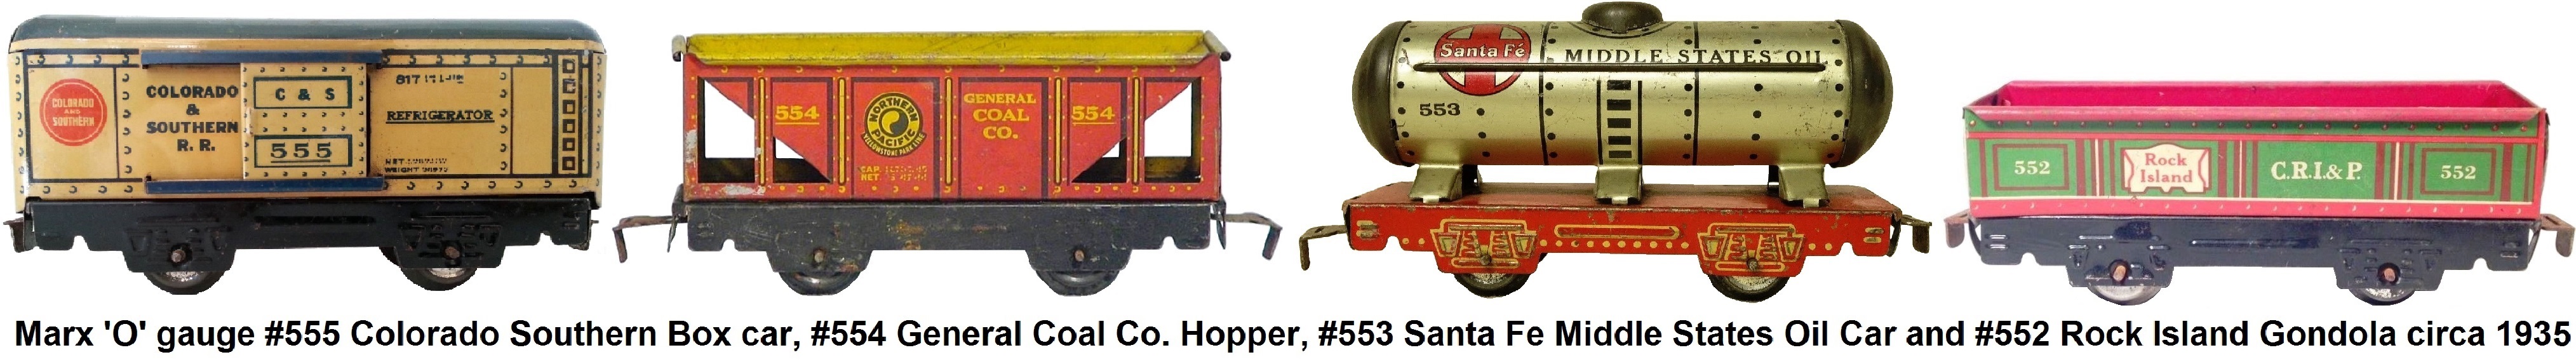 Marx 'O' gauge tinplate freight cars - #555 Colorado Southern Box Car, #554 General Coal Company Hopper, #553 Santa Fe Middle States Oil Car and #552 C R I & P Rock Island Vintage Marlines Gondola